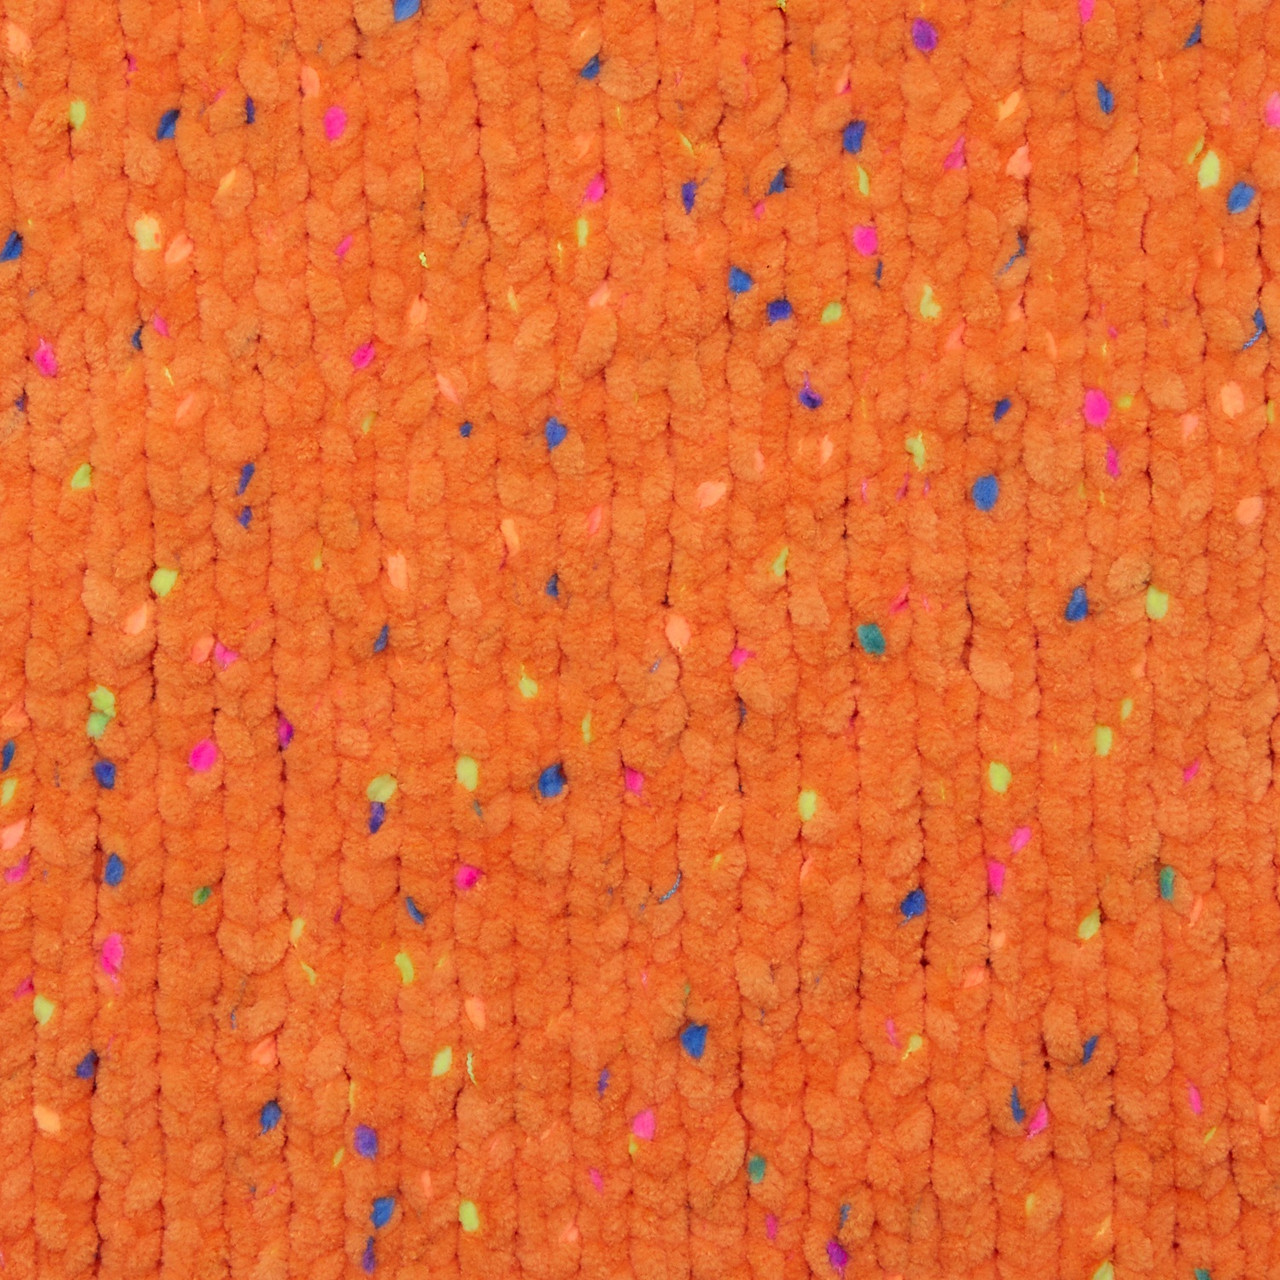 Premier Yarn Parfait Chunky Pom Pom Yarn - Citrus Burst, 109 yds